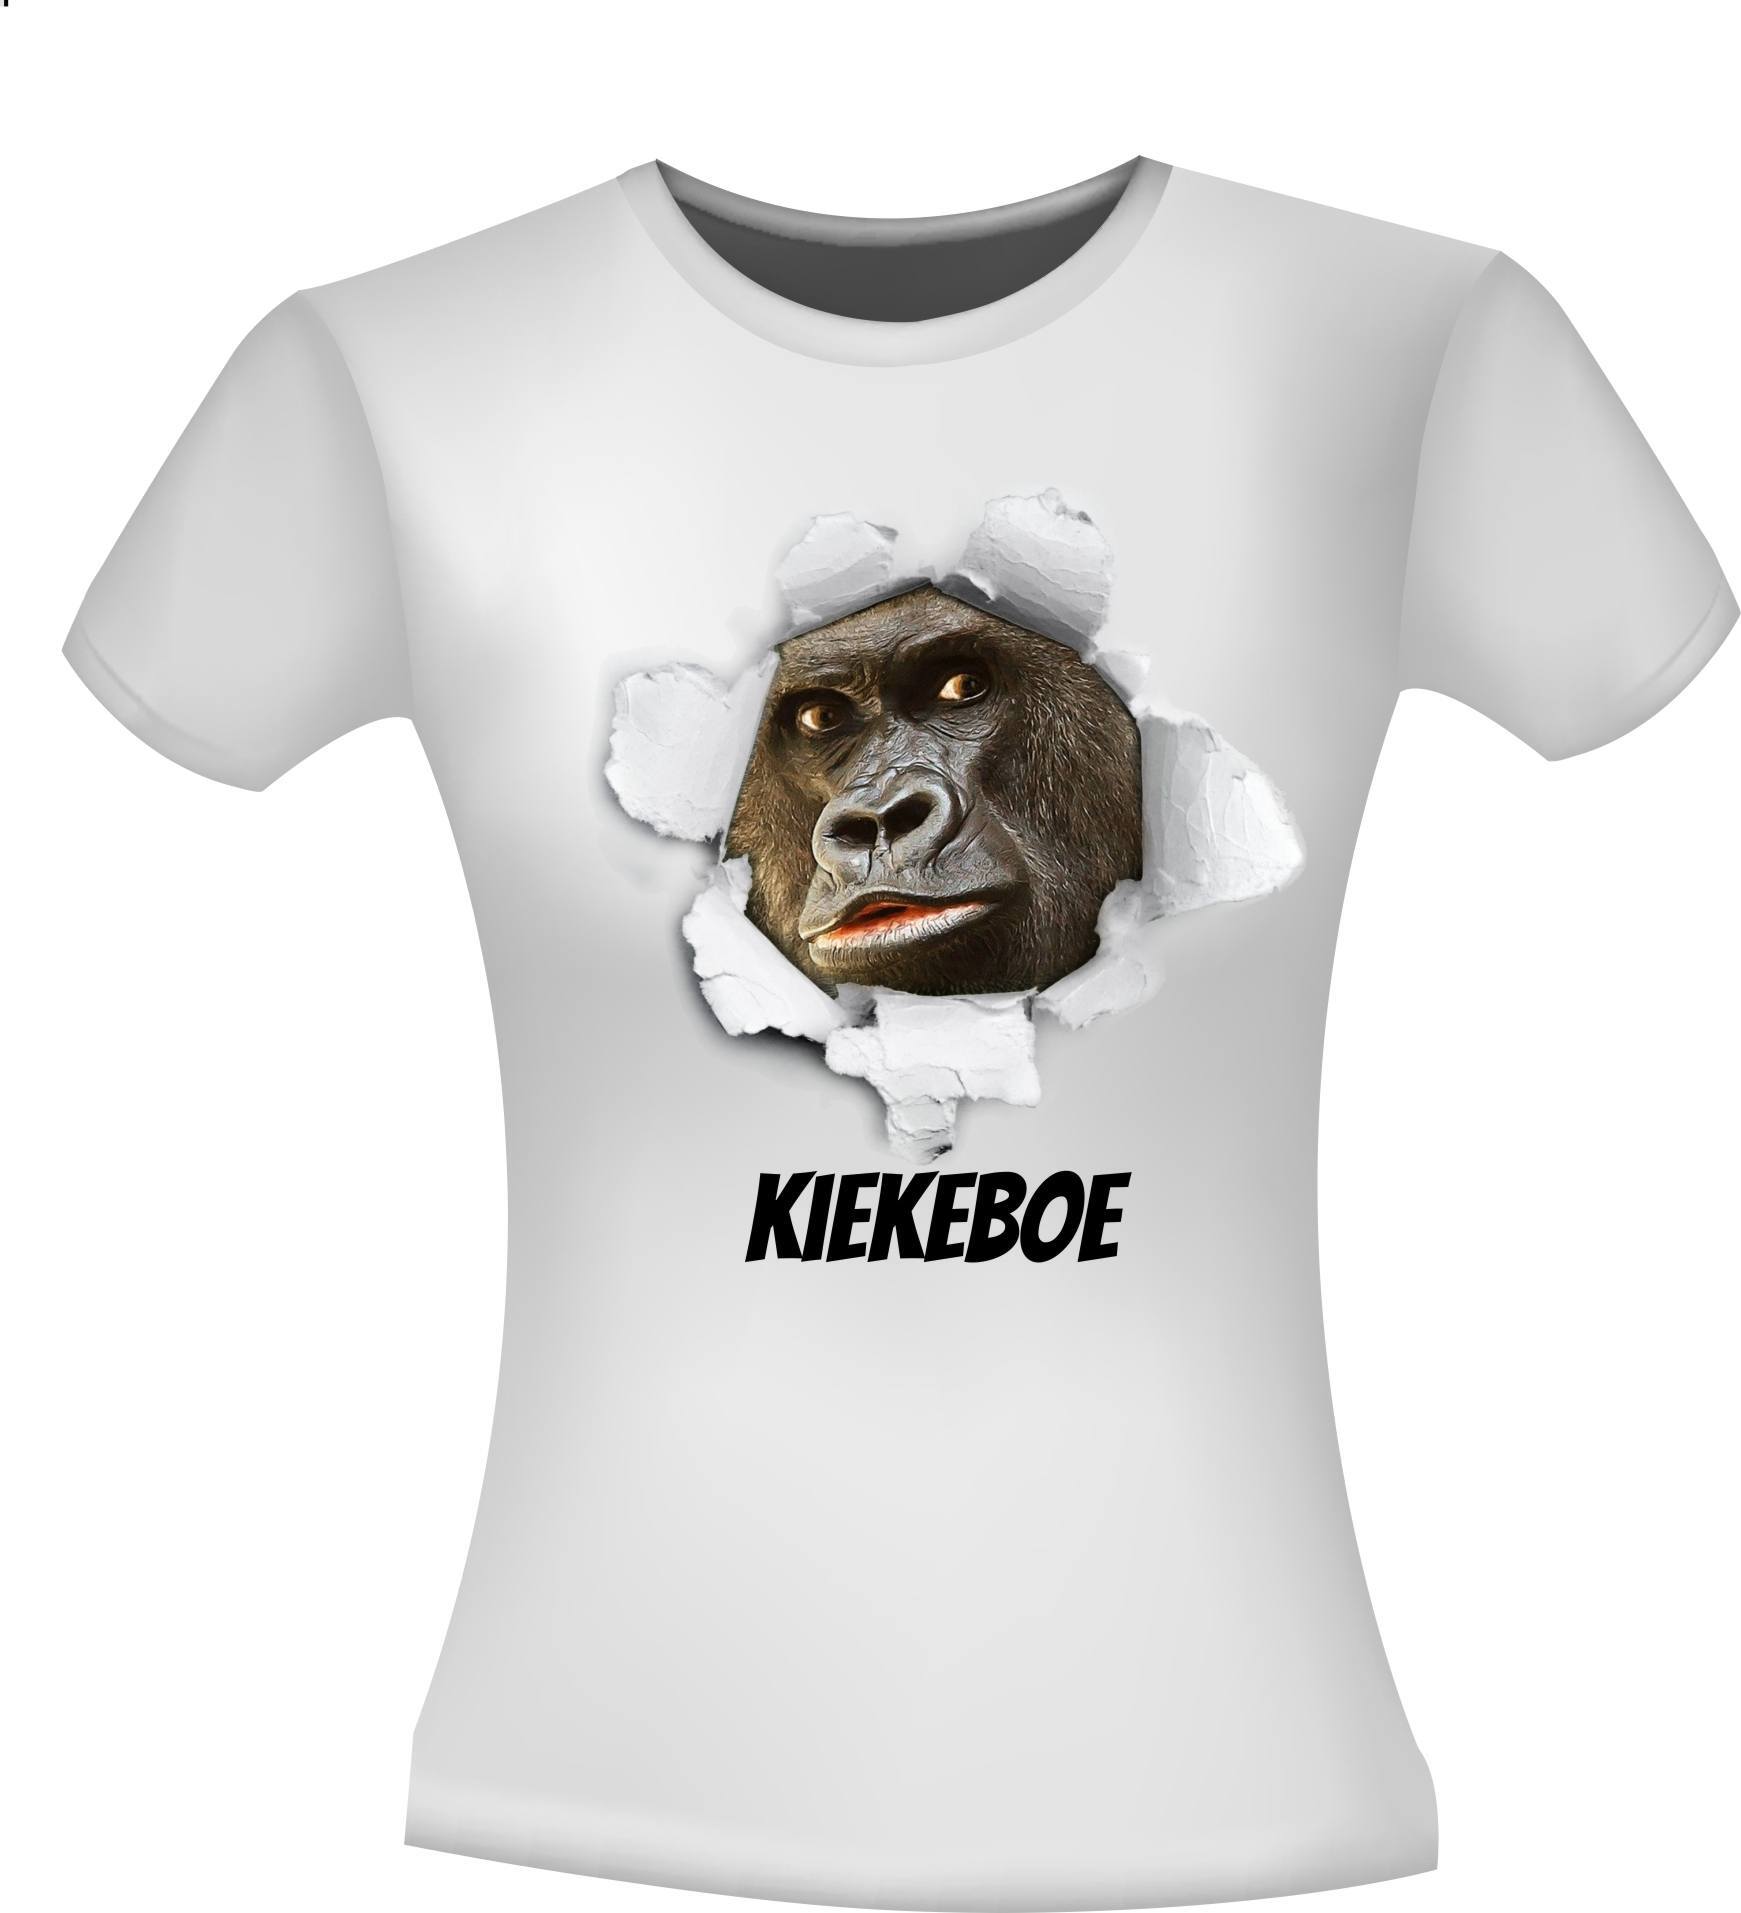 Echt niet Hervat droogte Kiekeboe aap grappig gek t-shirt gek humor